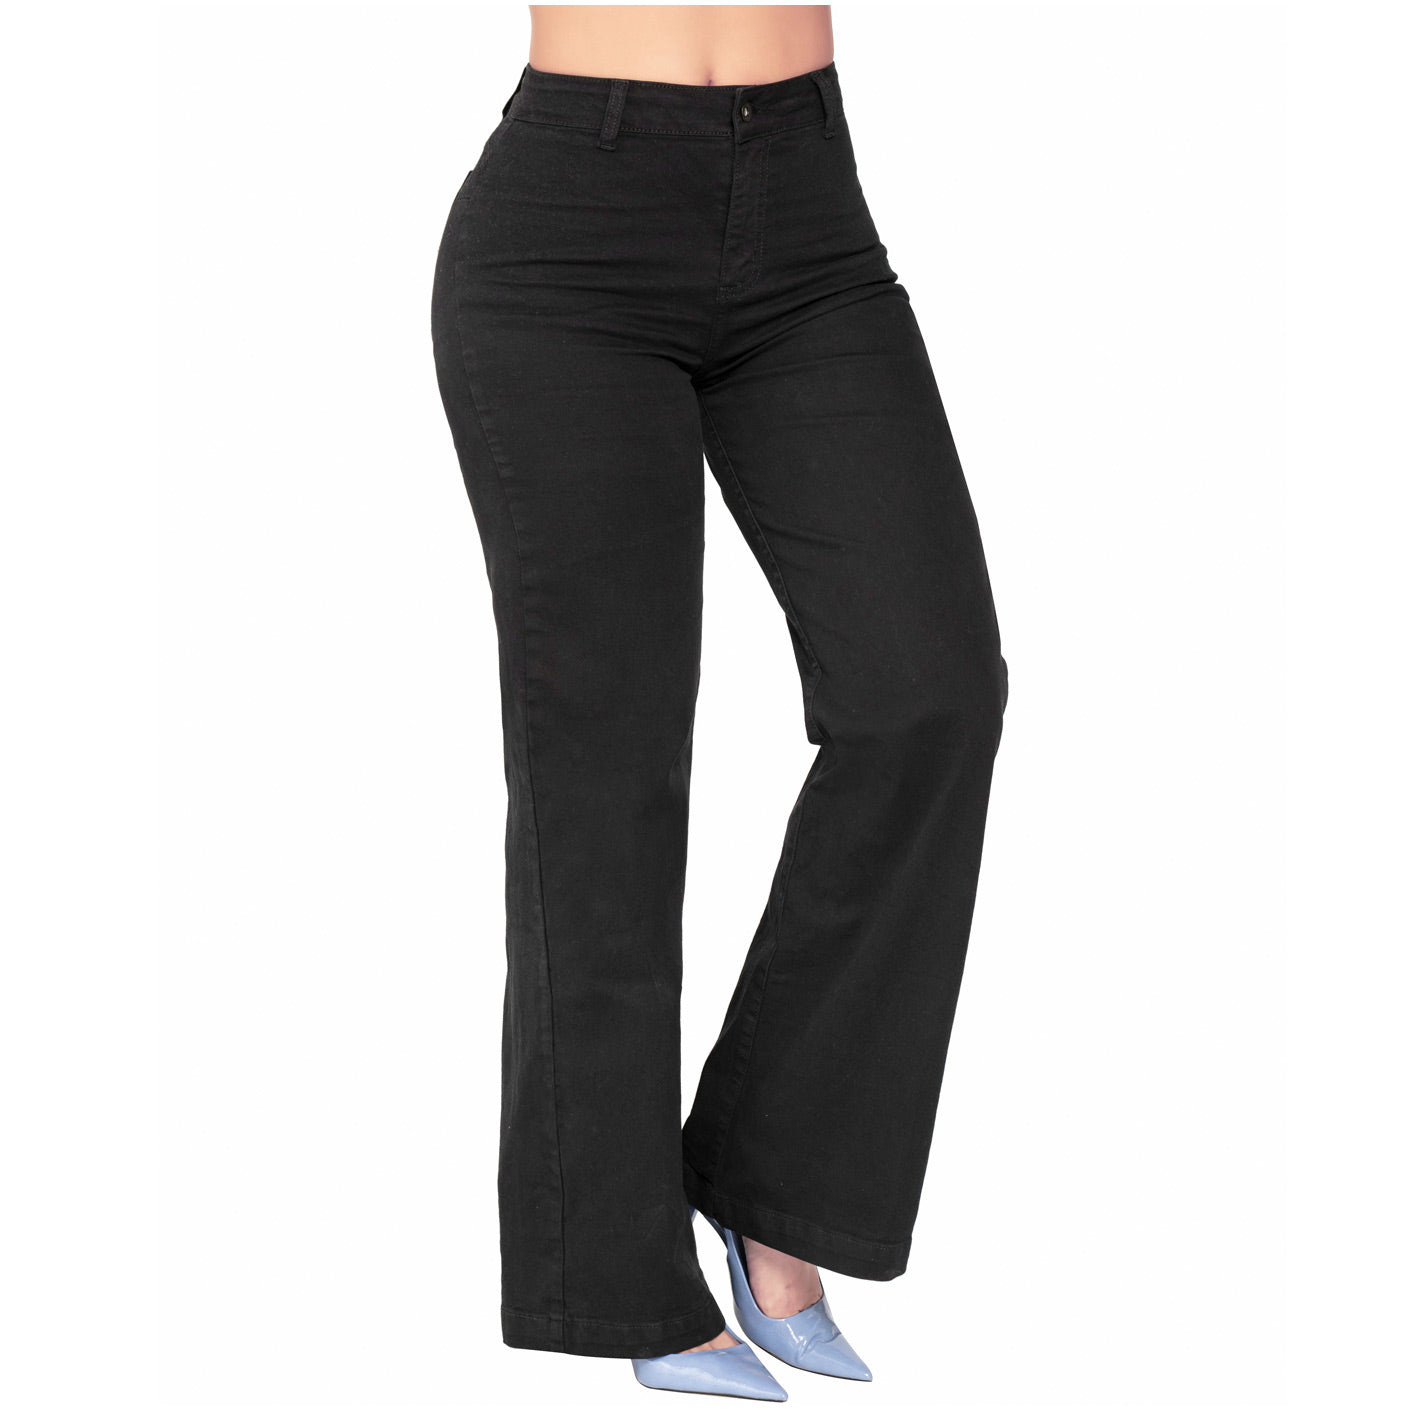 Lowla 242363 - Straight Leg High Waisted White jeans for Women